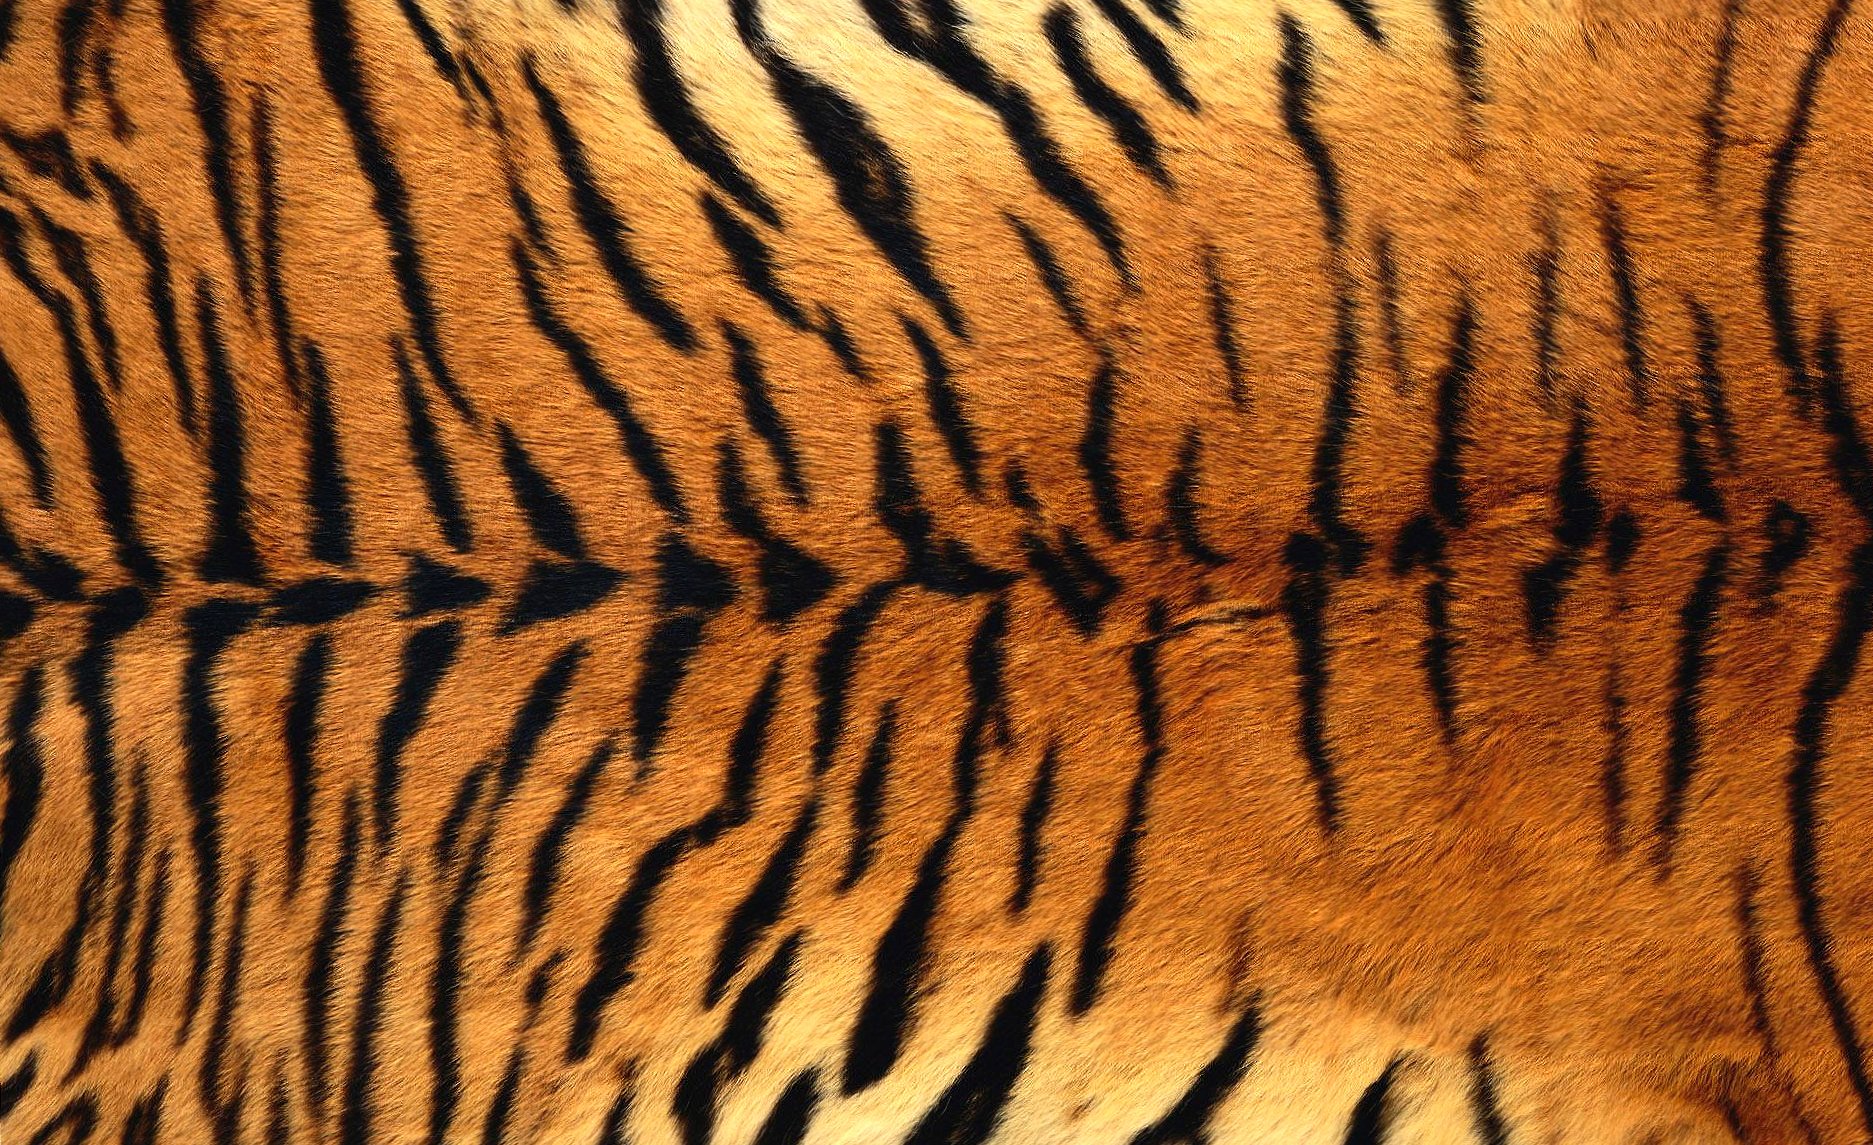 Tiger skin at 2048 x 2048 iPad size wallpapers HD quality